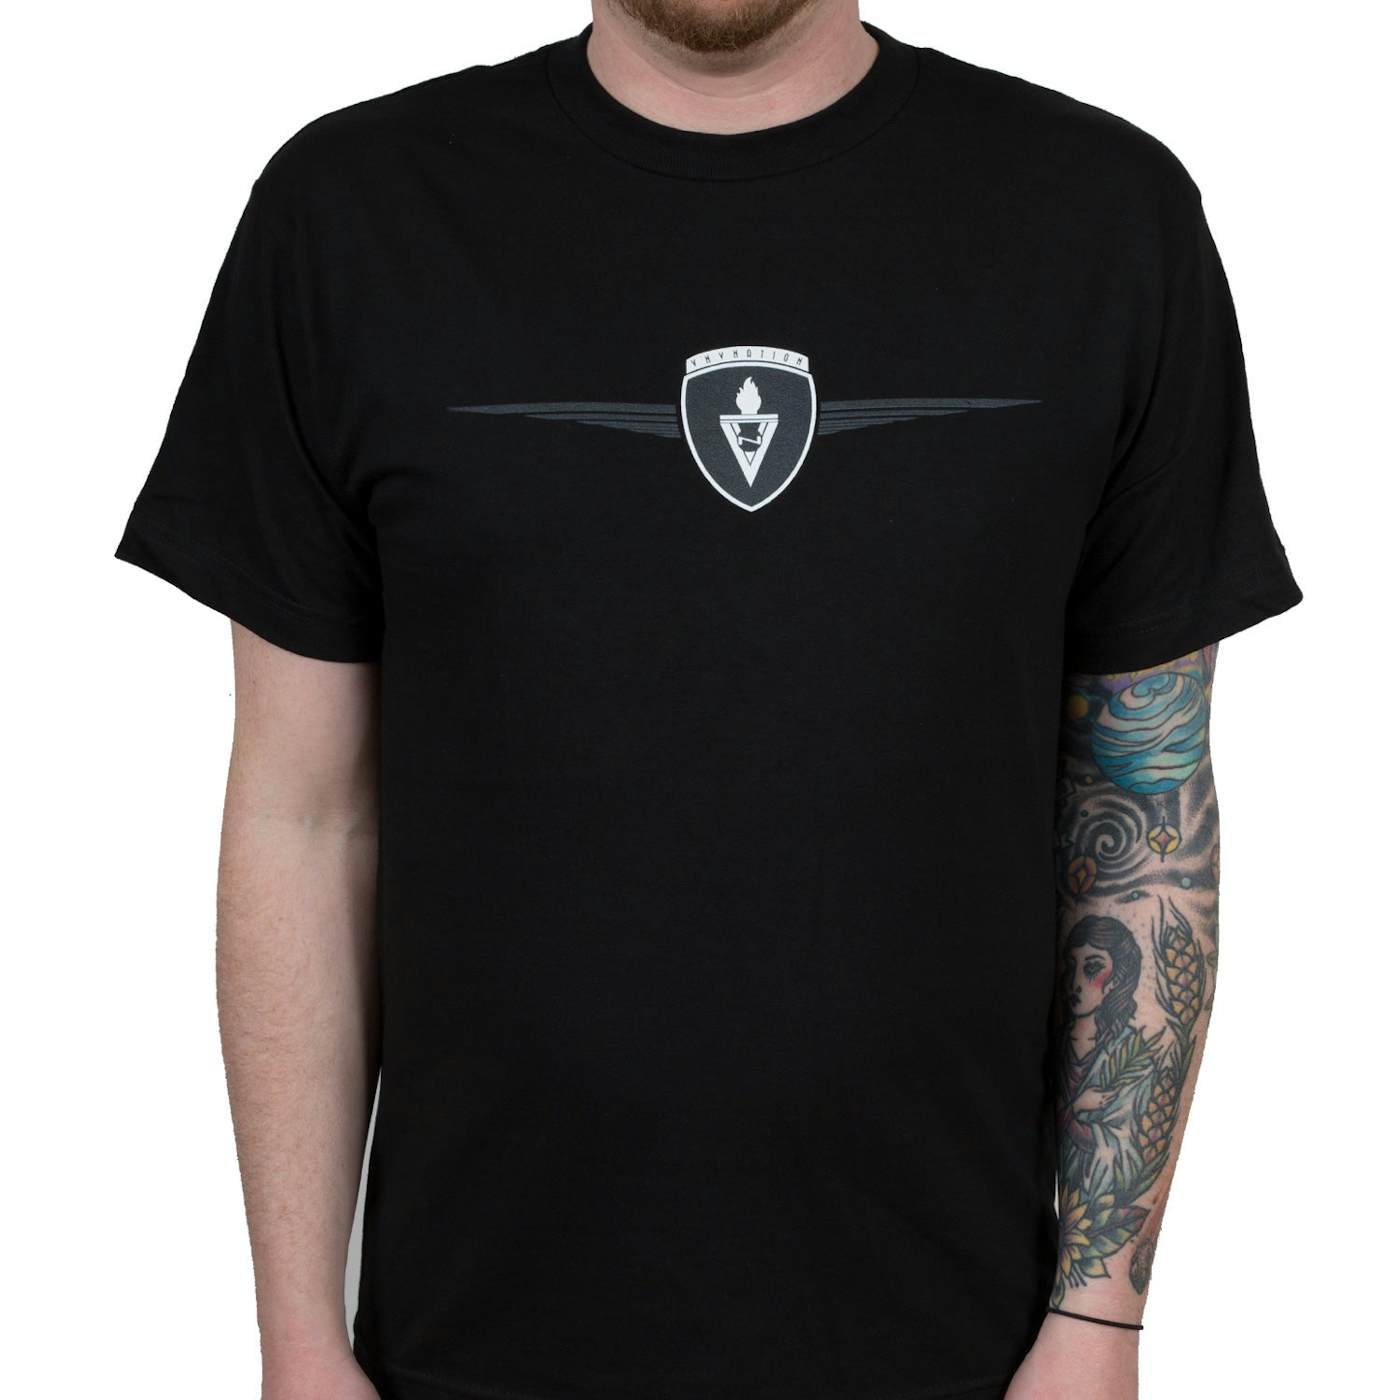 VNV Nation "Compendium" T-Shirt